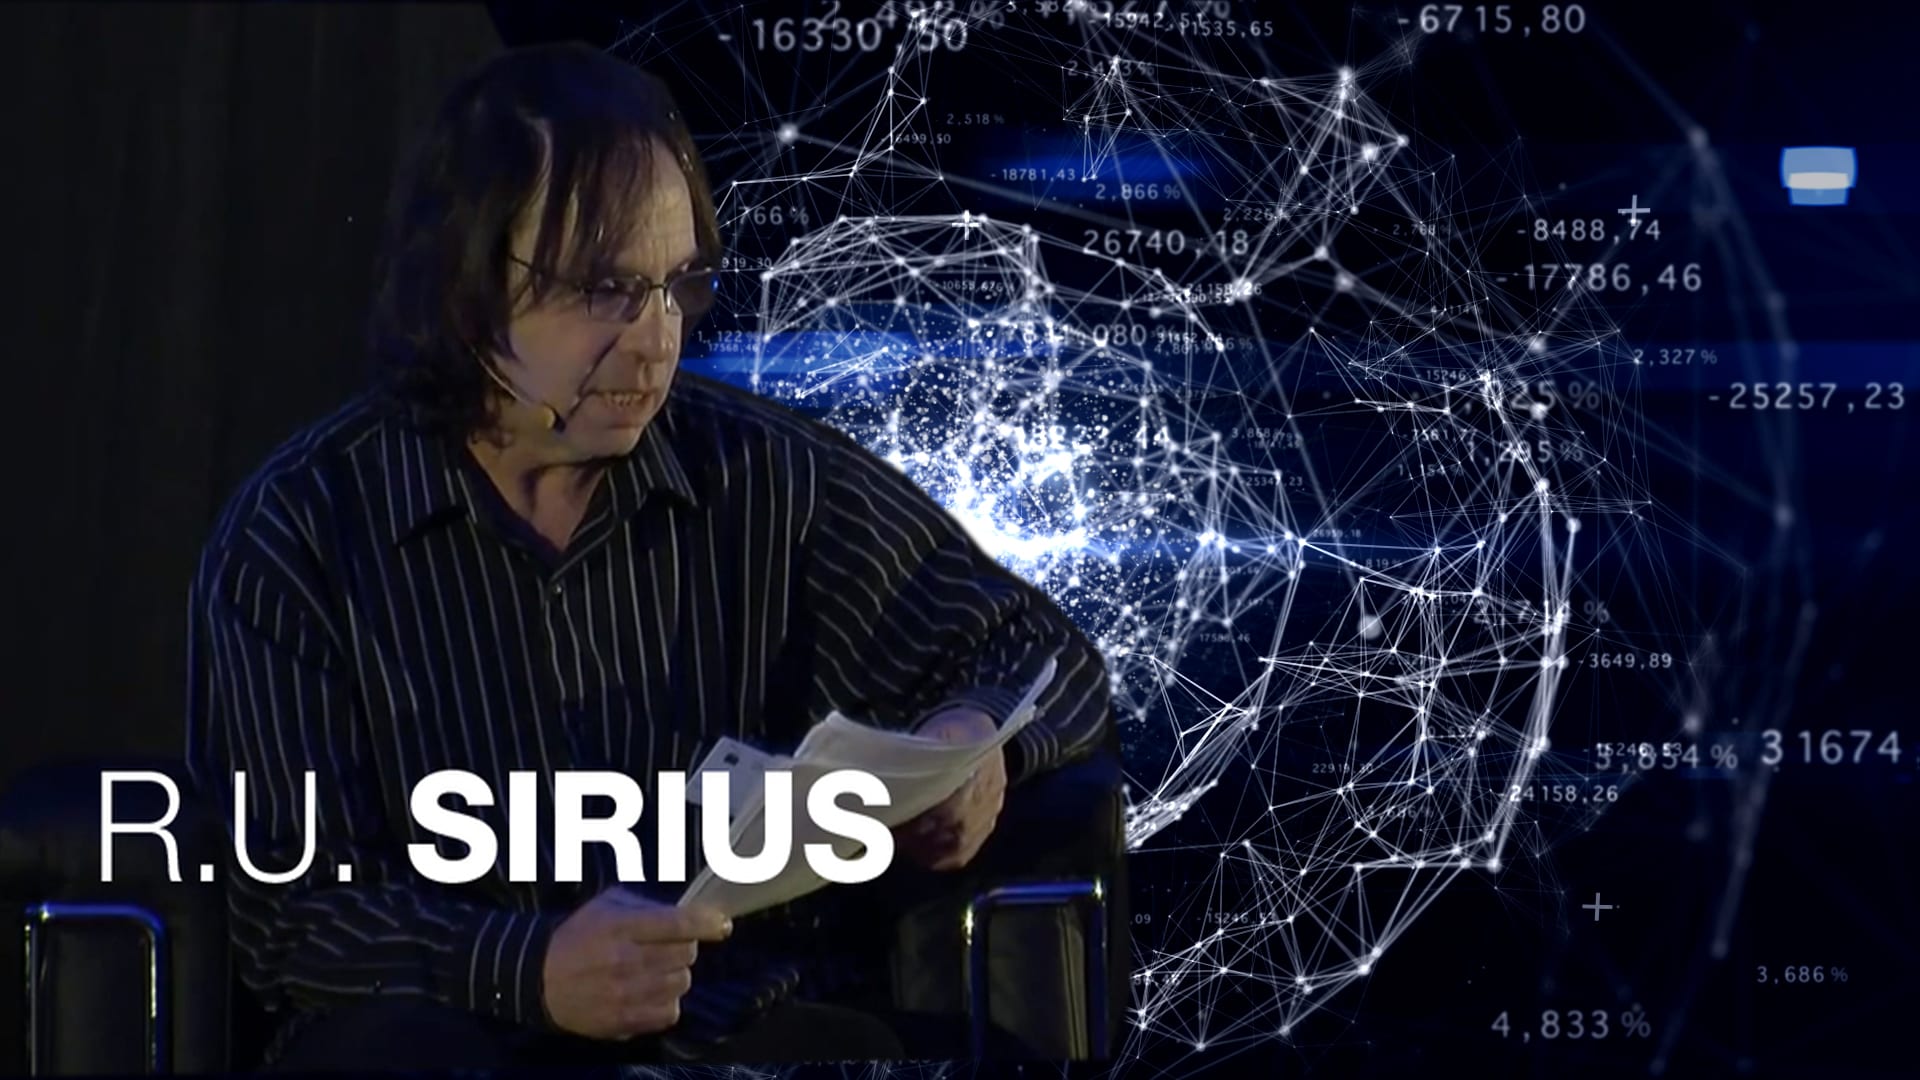 March 29 event: Cyber-Guru R.U. Sirius to discuss ‘Information Apocalypse’